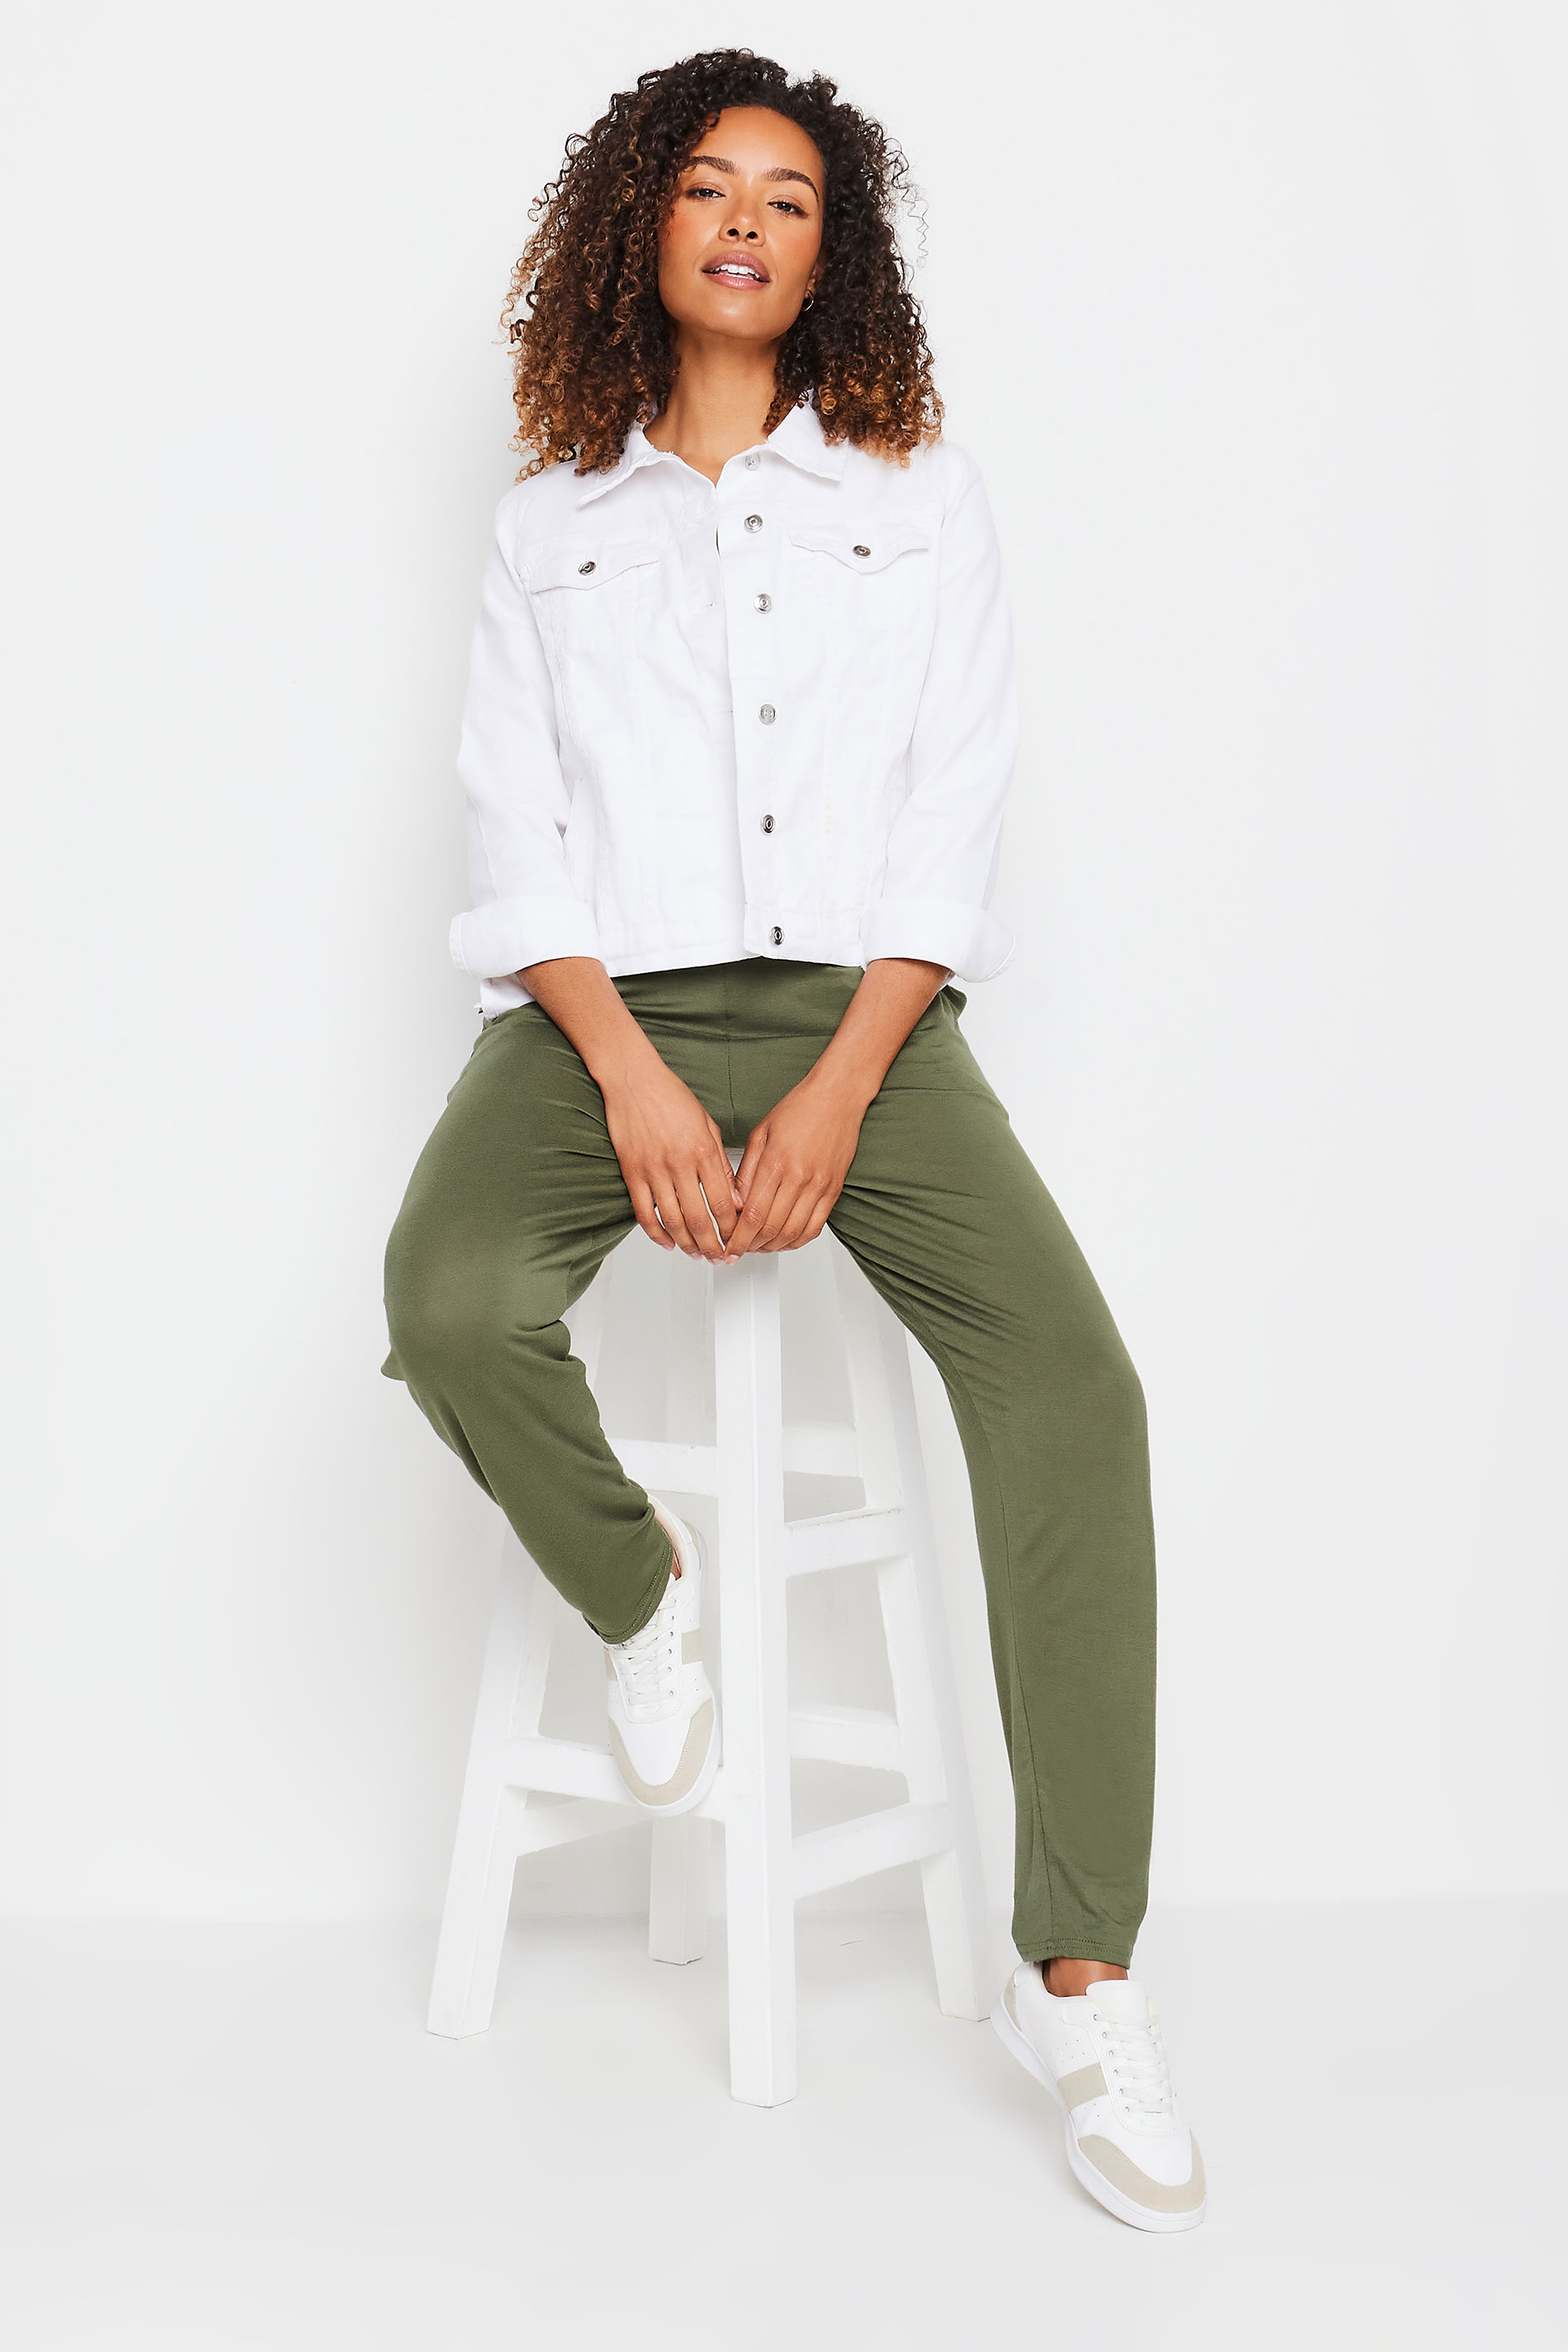 M&Co Khaki Green Hareem Jersey Trousers | M&Co 1